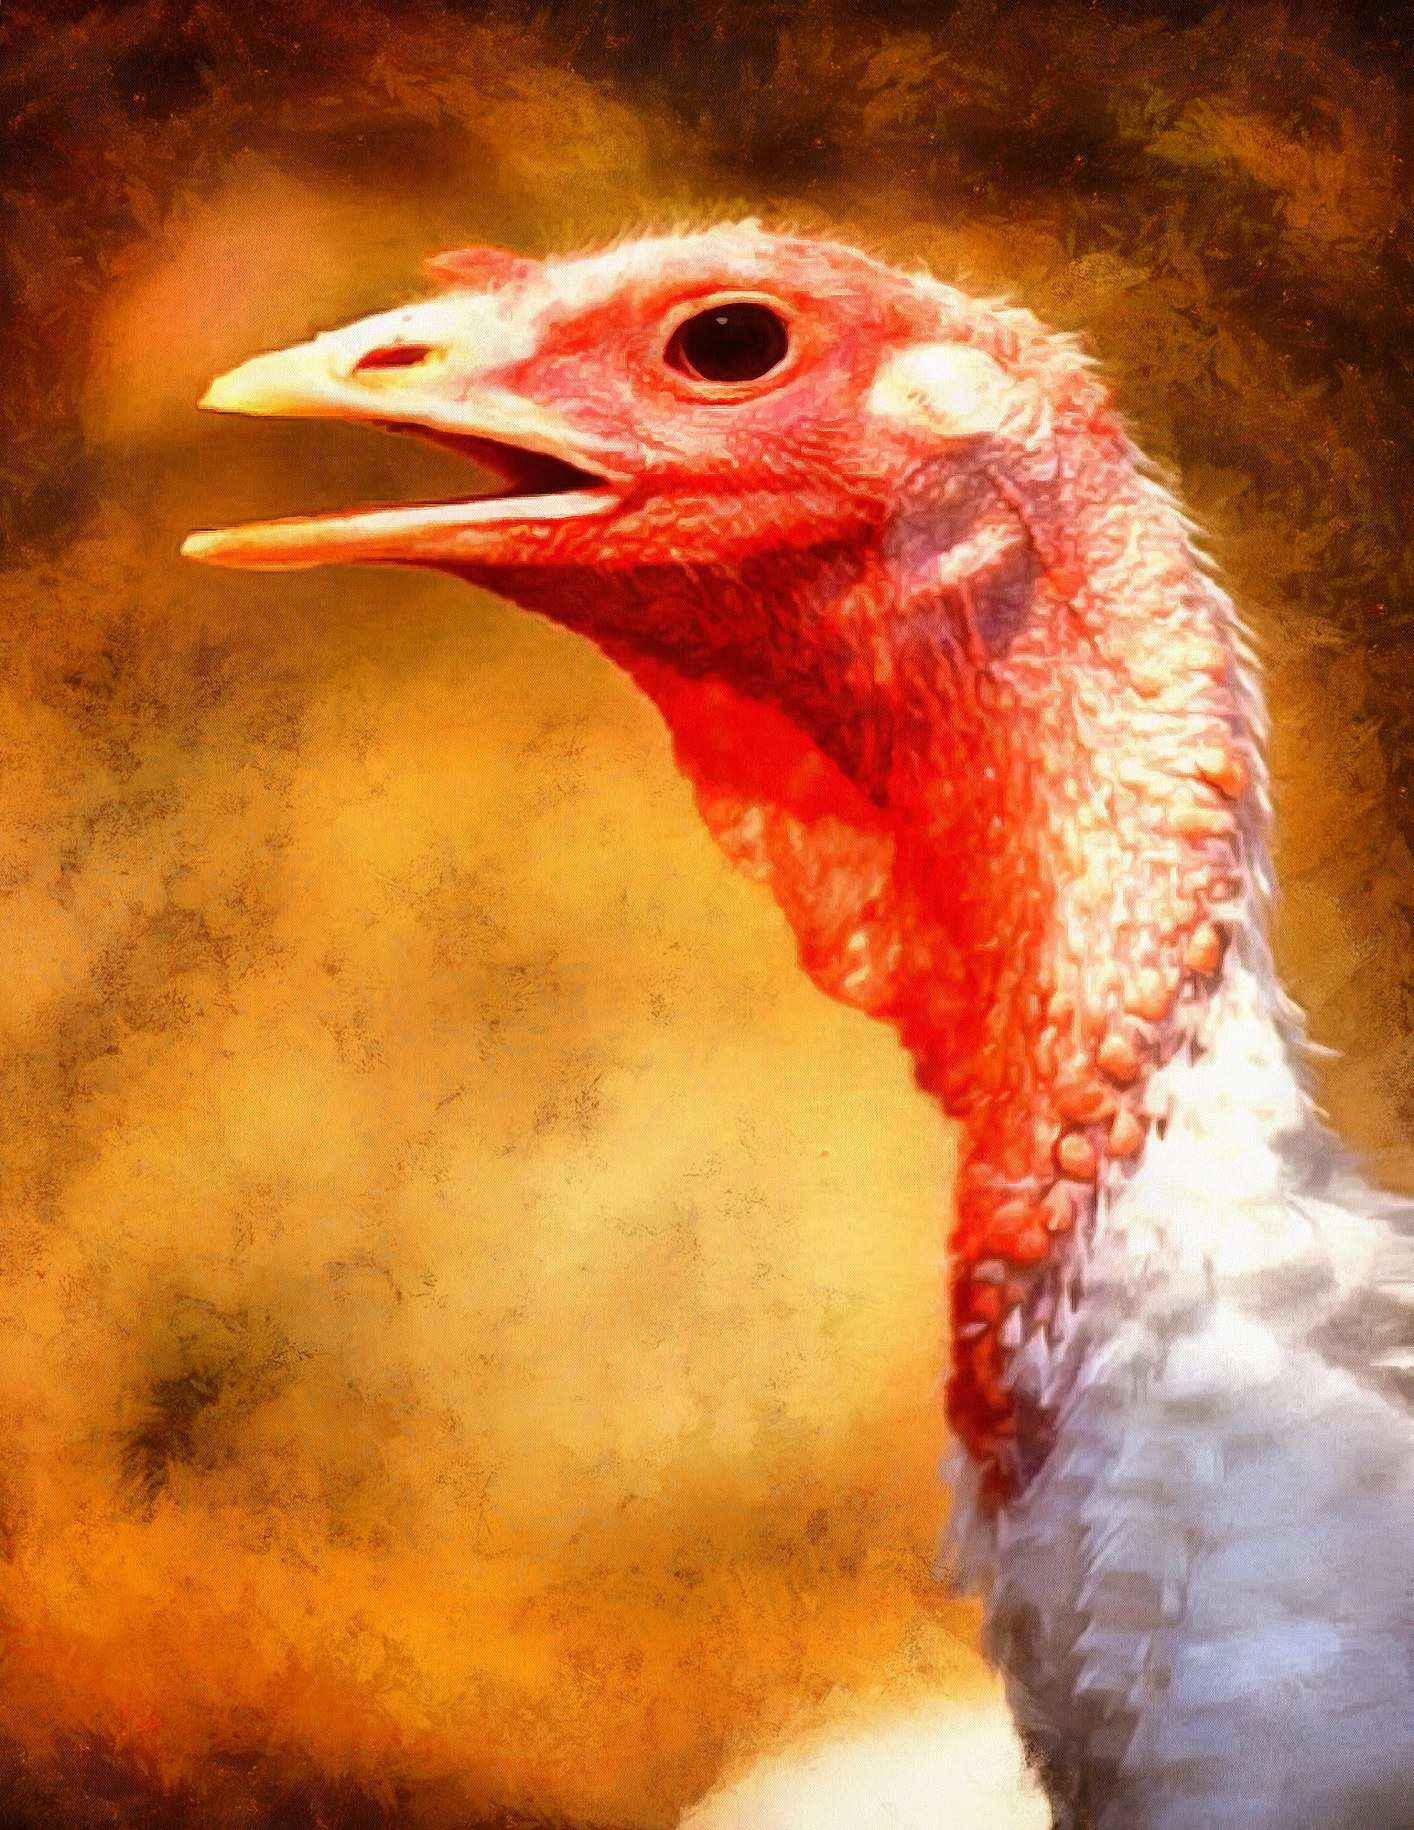 white turkey, live turkey, bird, holiday, thanksgiving, turkey, Thanksgiving Day,   - thanksgiving, stock free image, public domain photos, free stock photo, download public domain images.